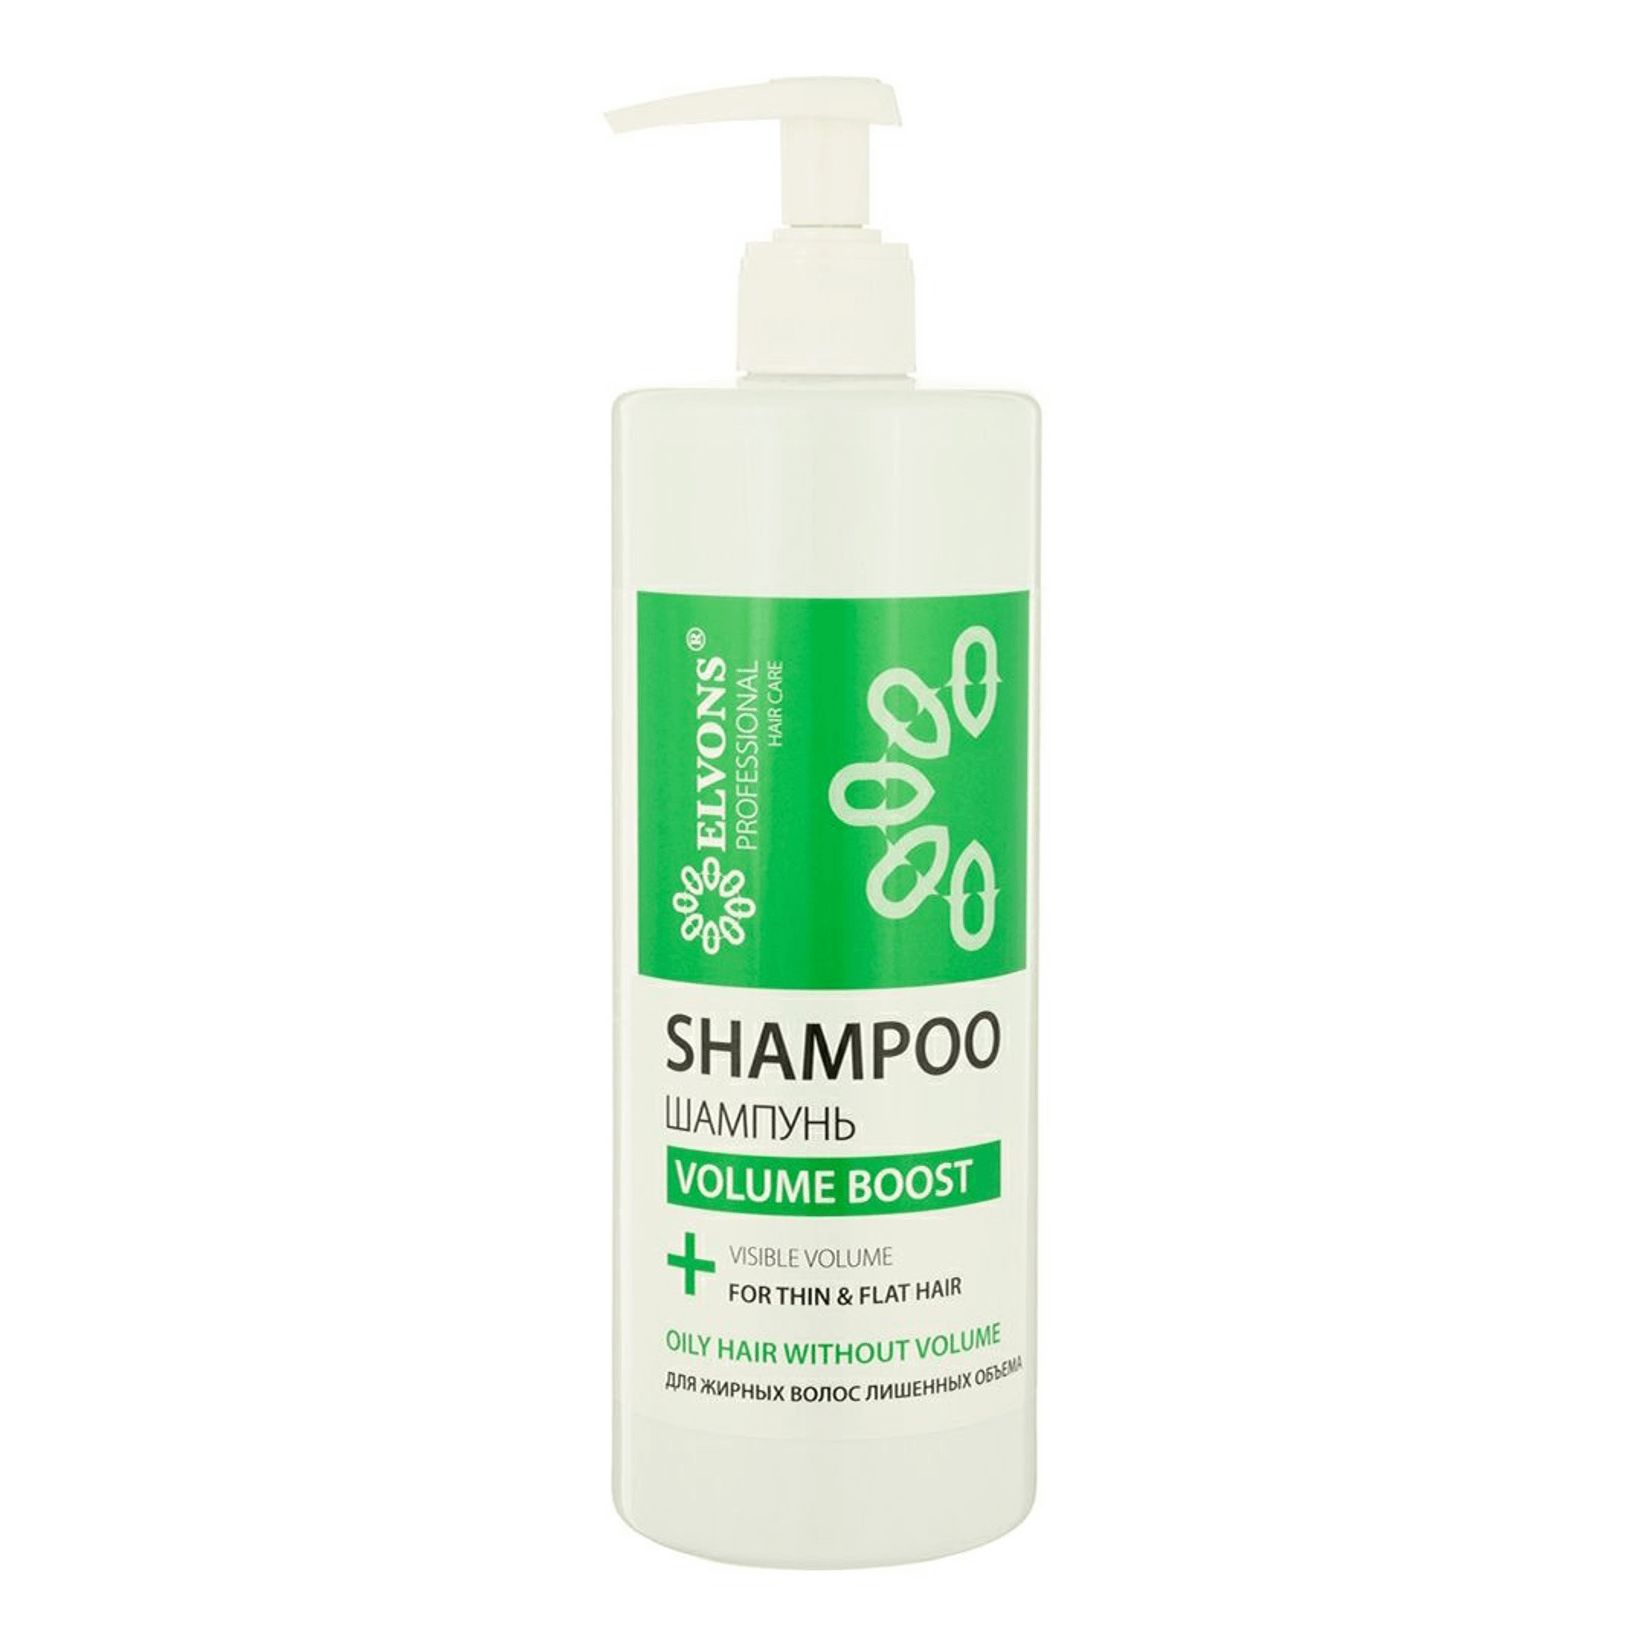 Shampoo Volume Boost elvons. Elvons Olive body 250 крем отзывы. Лишай волос шампунь